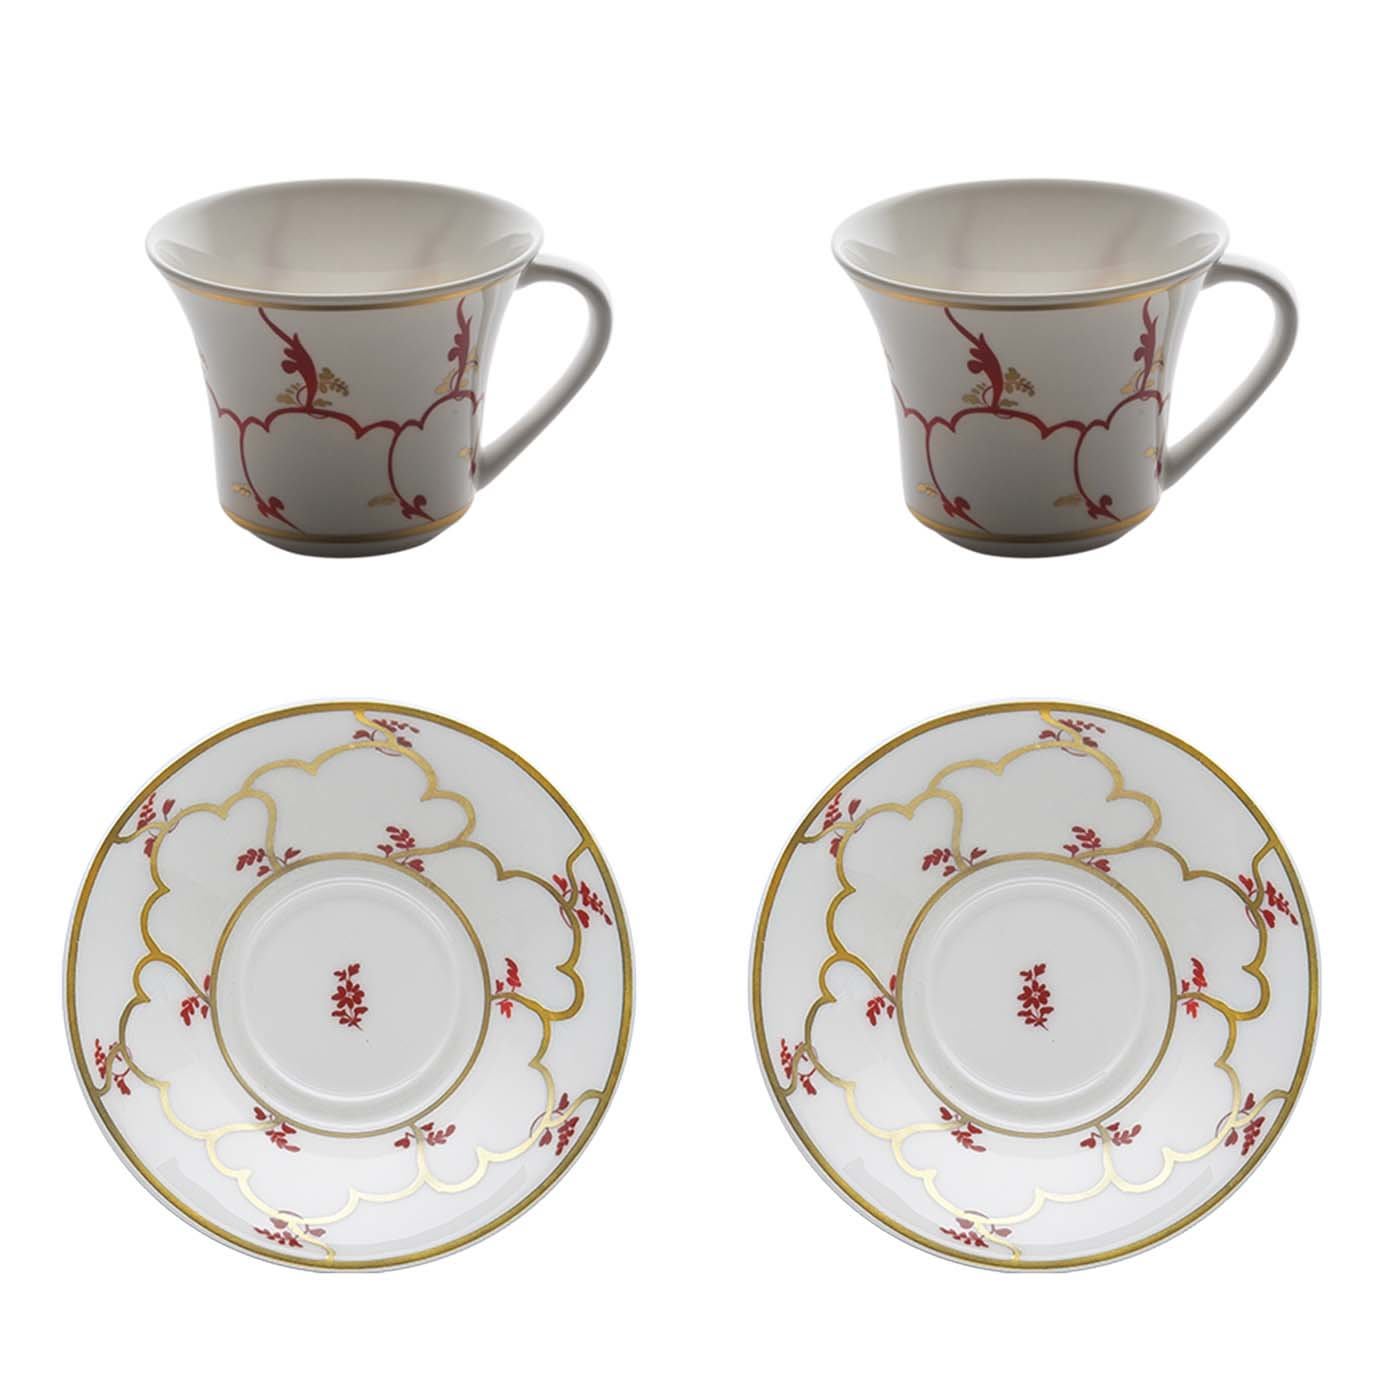 Feston E Cadena Set of 2 Coffee Cups with Saucers - Geminiano Cozzi Venezia 1765